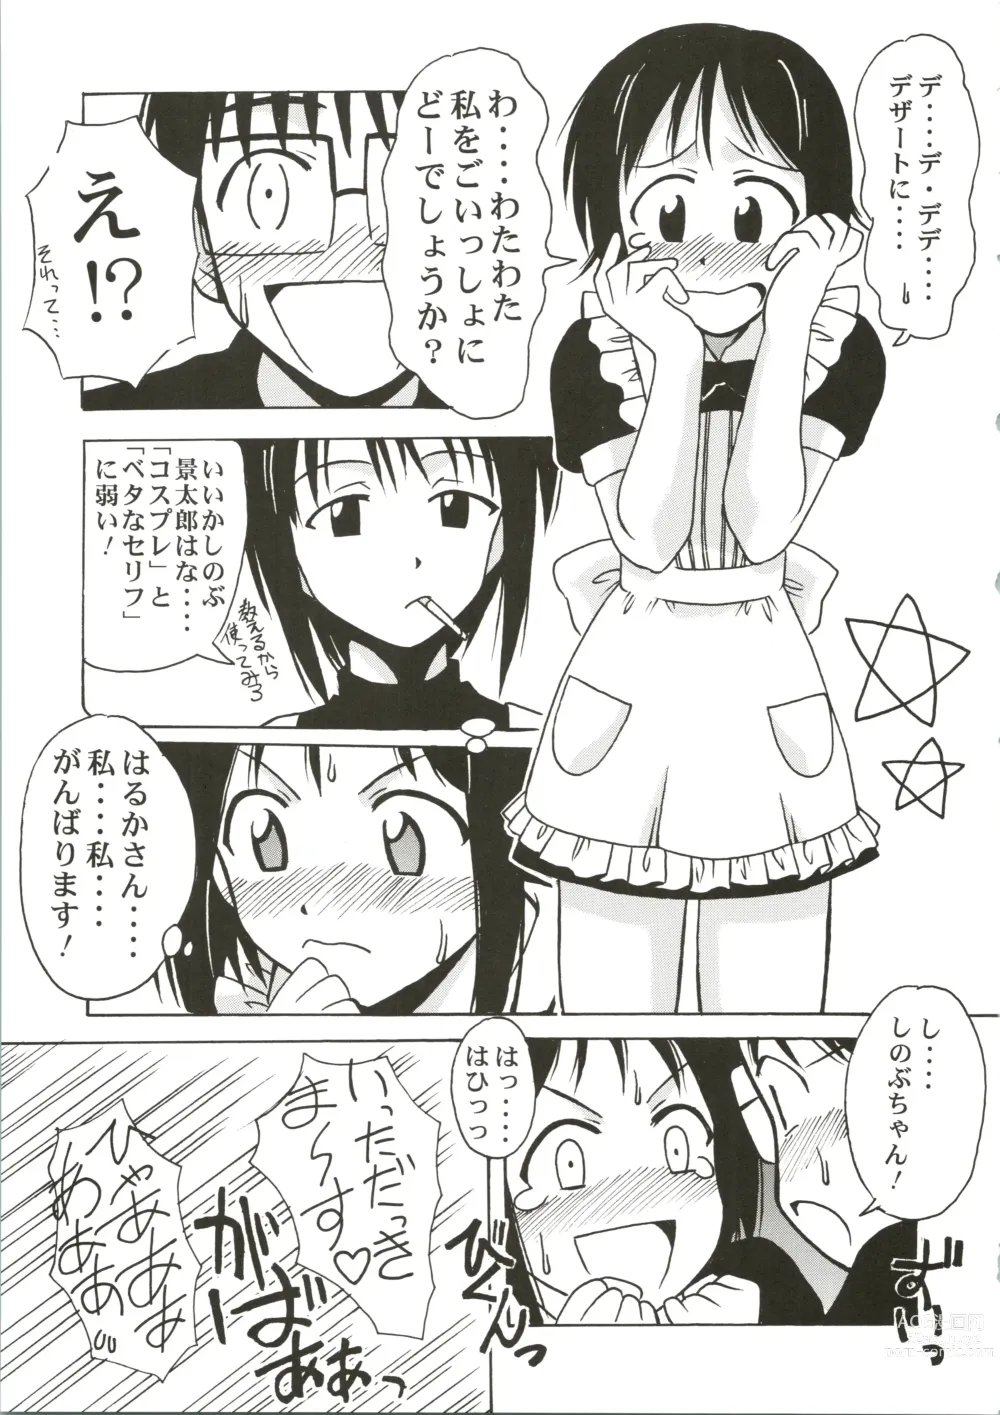 Page 23 of doujinshi Shinobu SP.